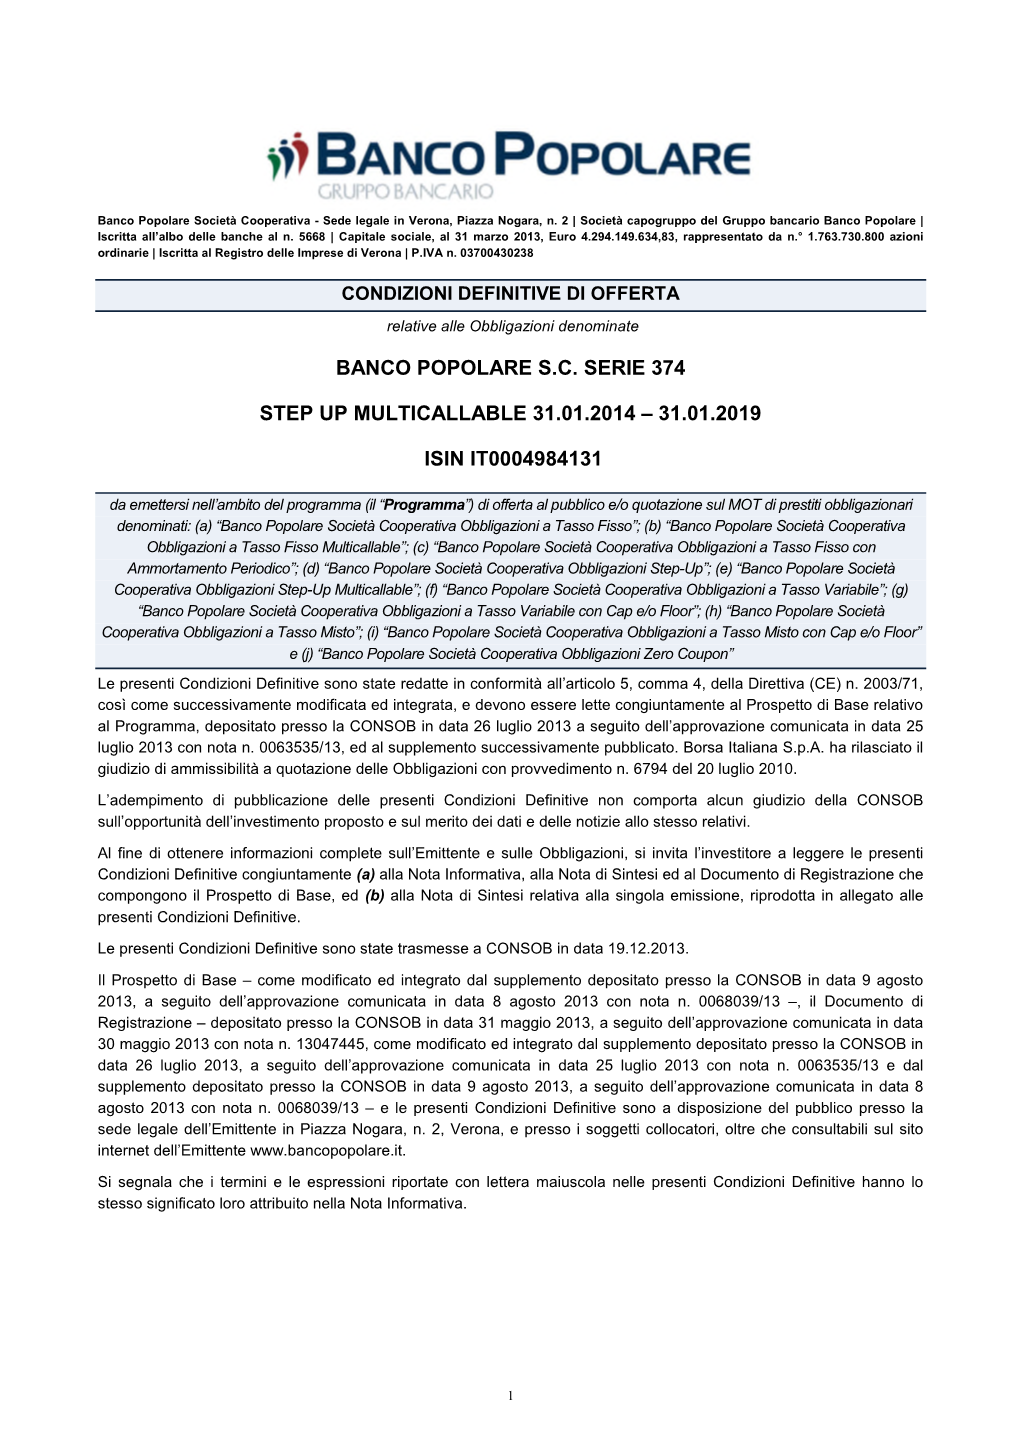 Banco Popolare Sc Serie 374 Step up Multicallable 31.01.2014